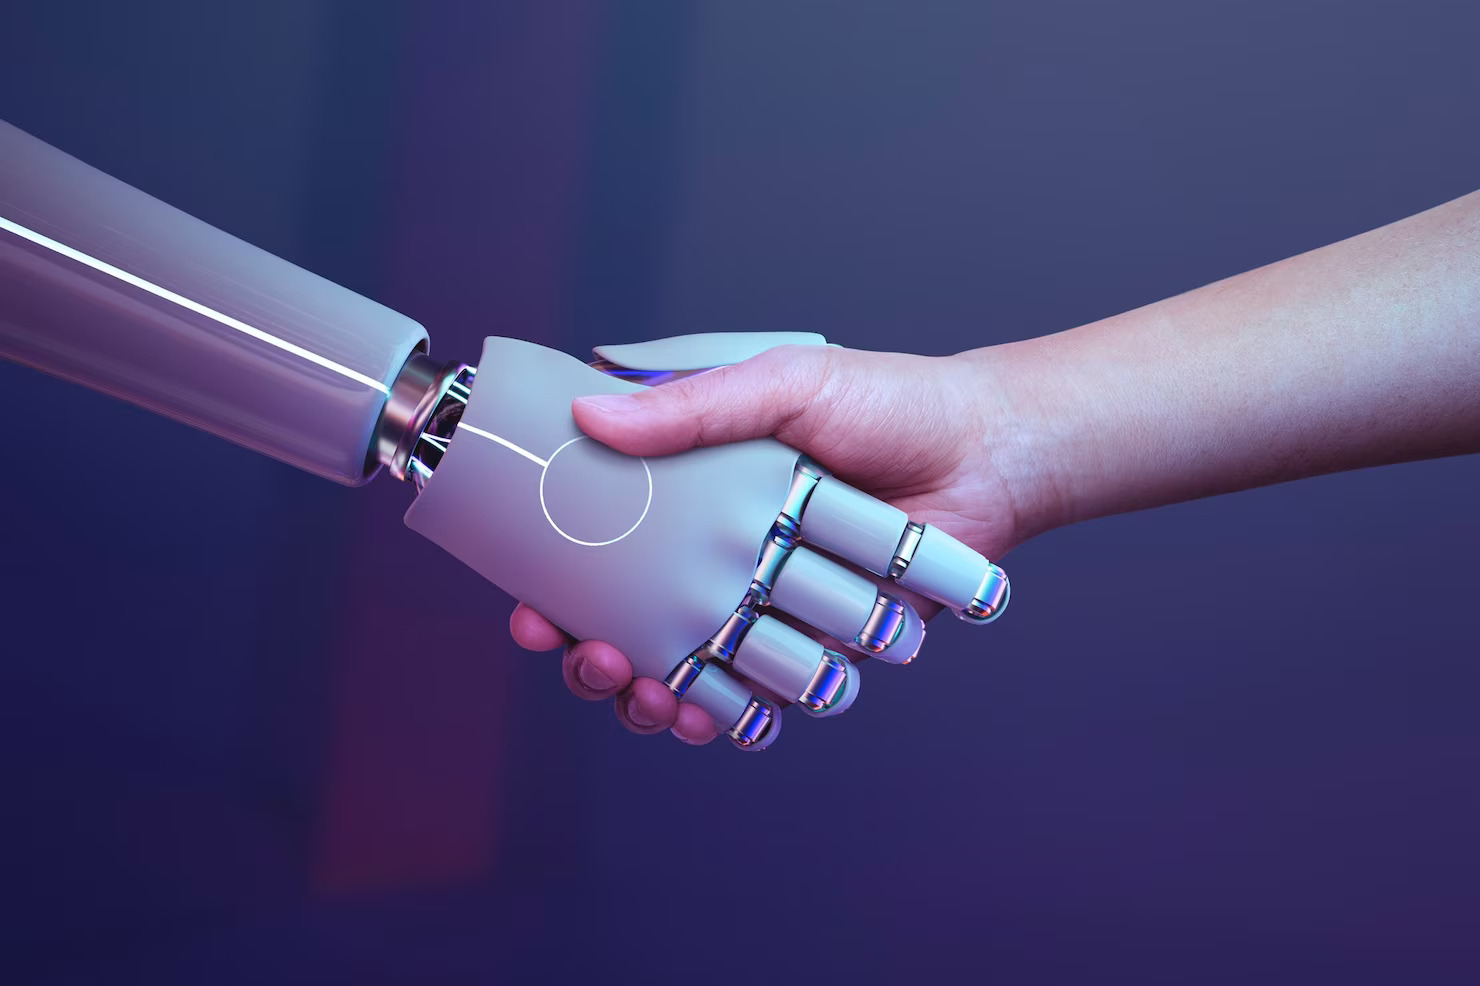 Robot handshake human background, futuristic digital age is constantly evolving